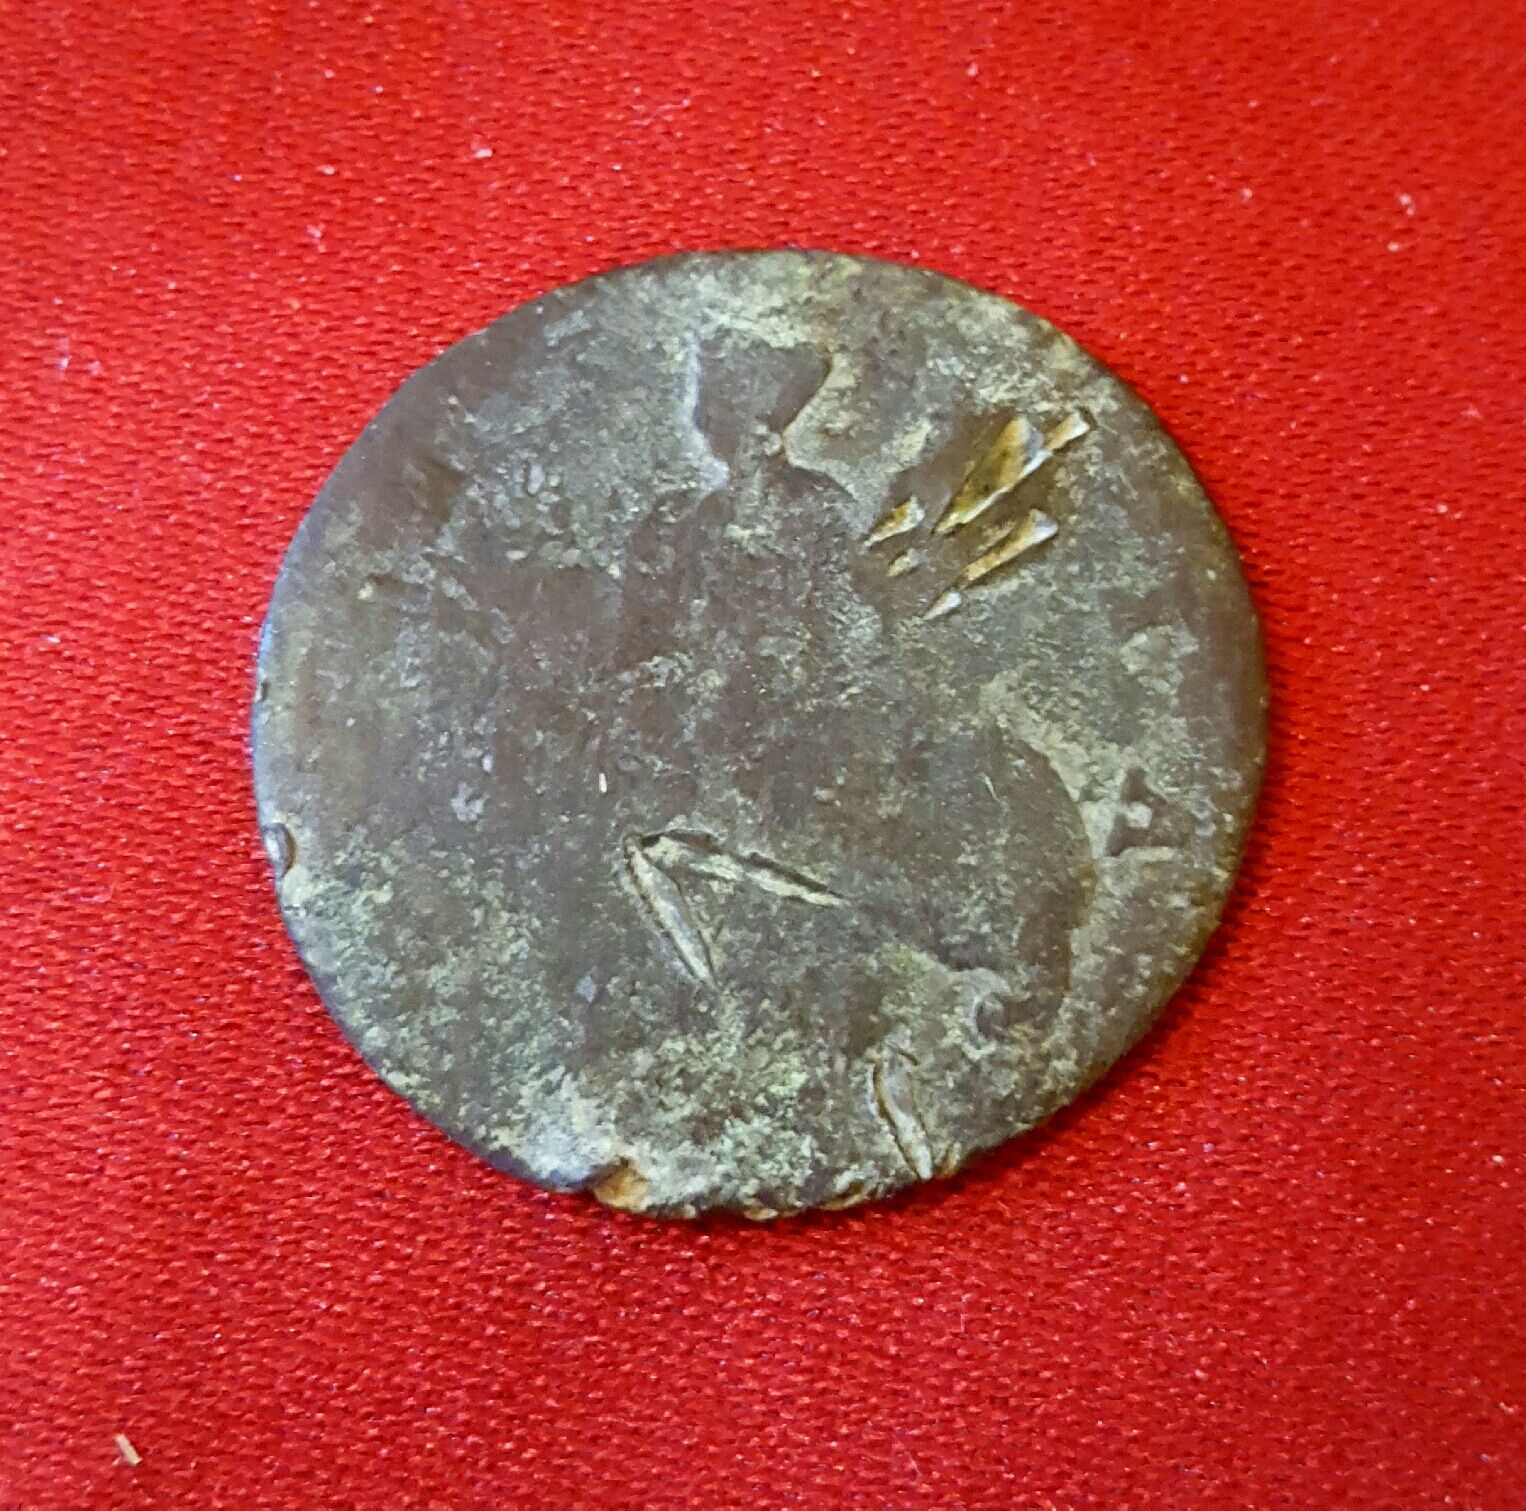 Well-worn King George II half penny